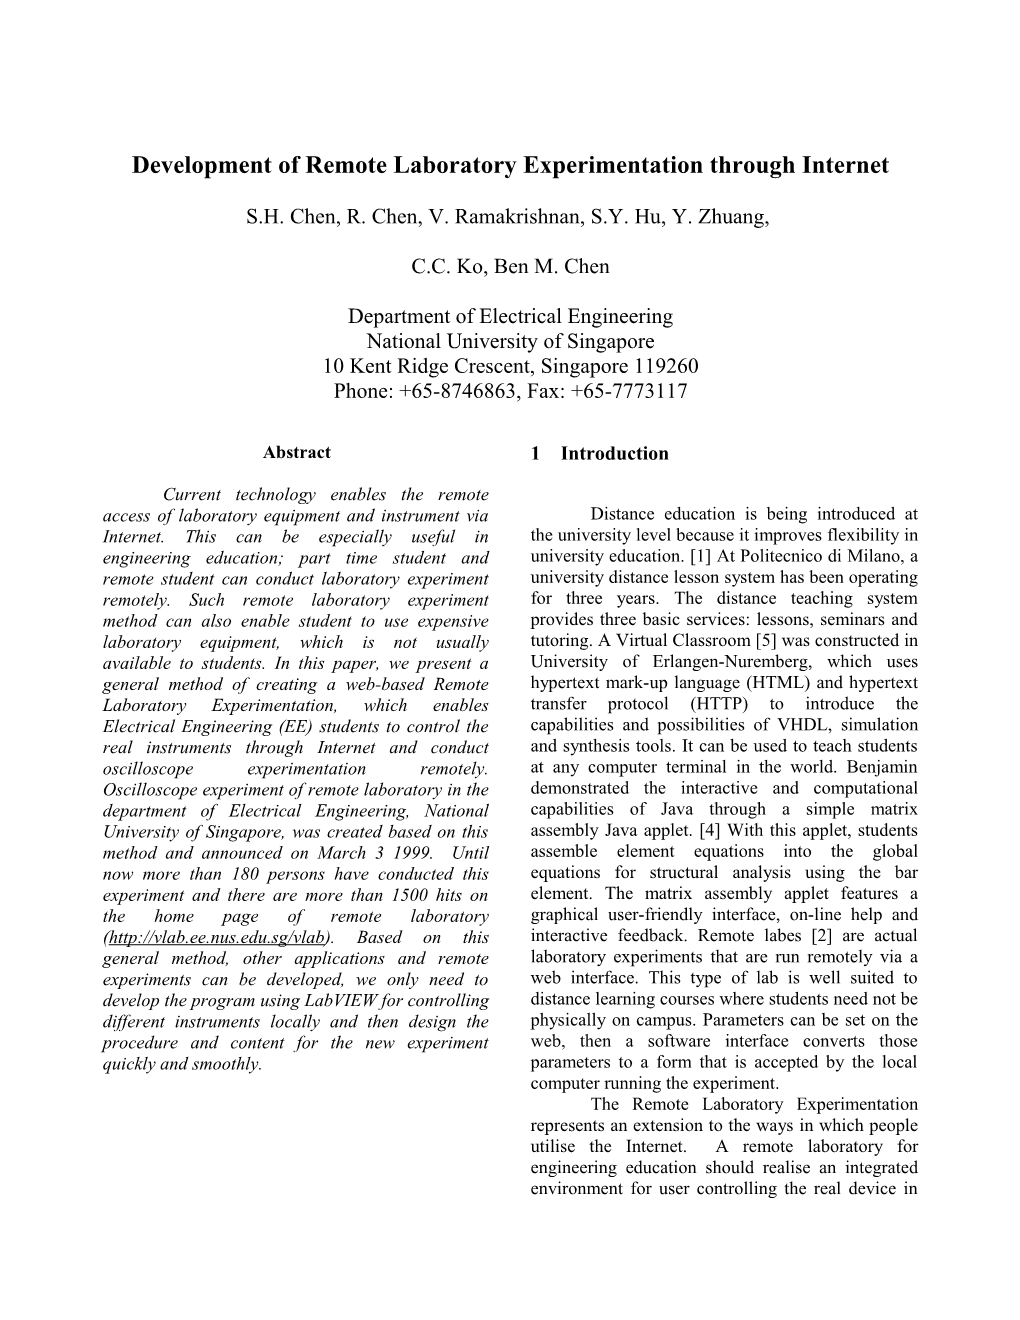 Development of Remote Laboratory Experimentation Through Internet